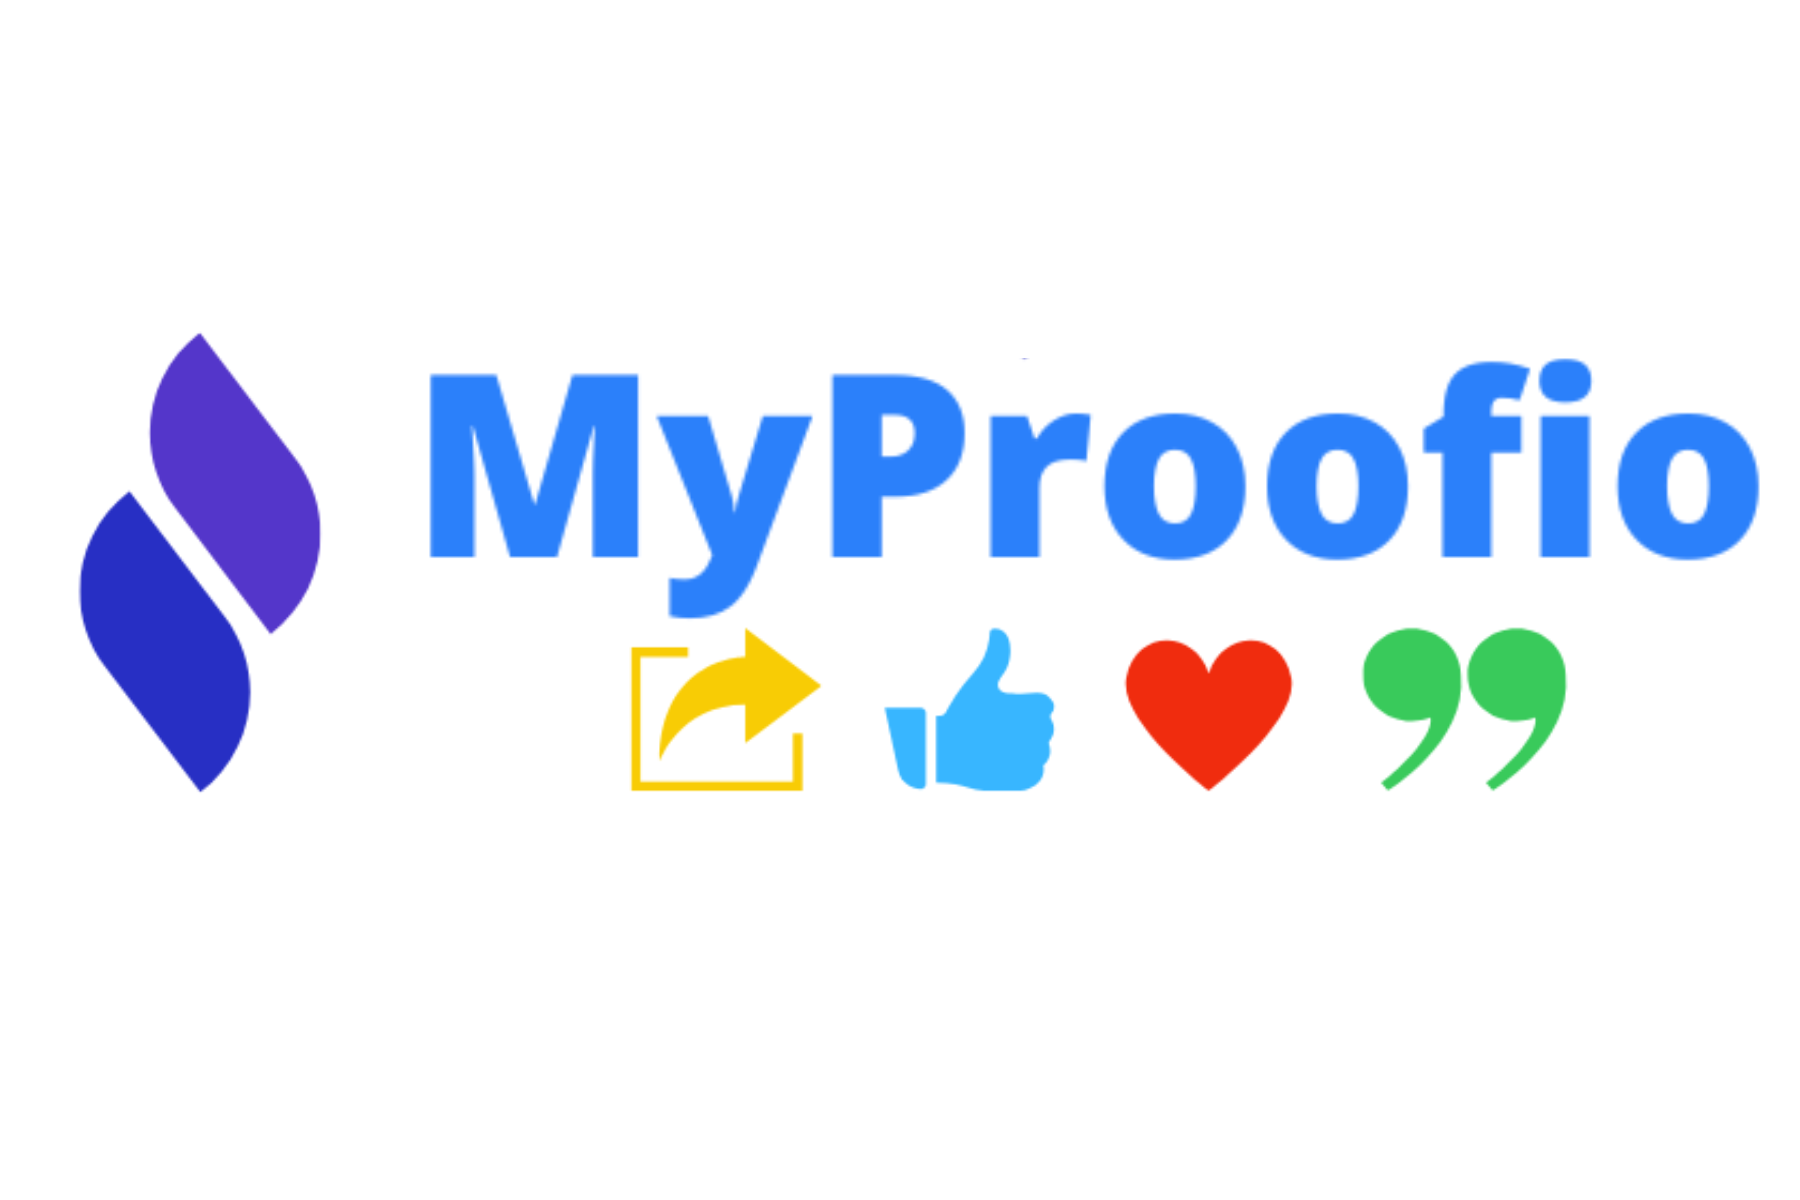 relevant-myproofio-logo.png